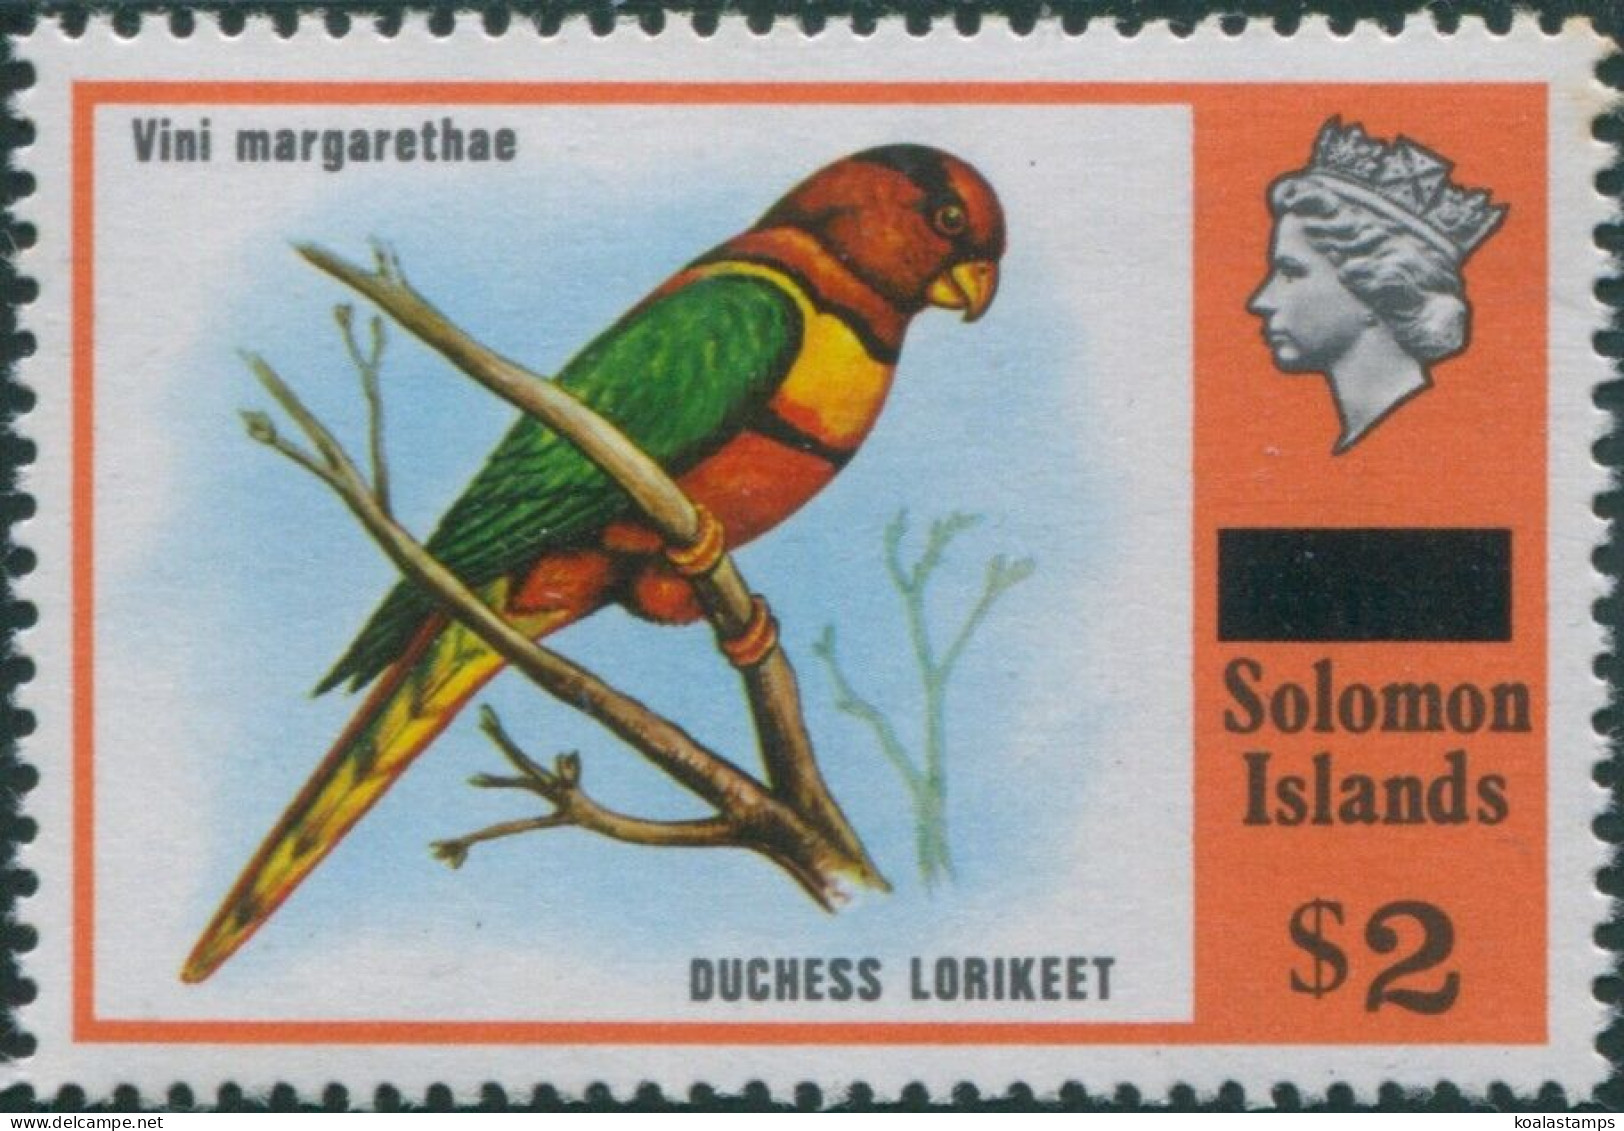 Solomon Islands 1975 SG299 $2 Duchess Lorikeet MNH - Solomoneilanden (1978-...)